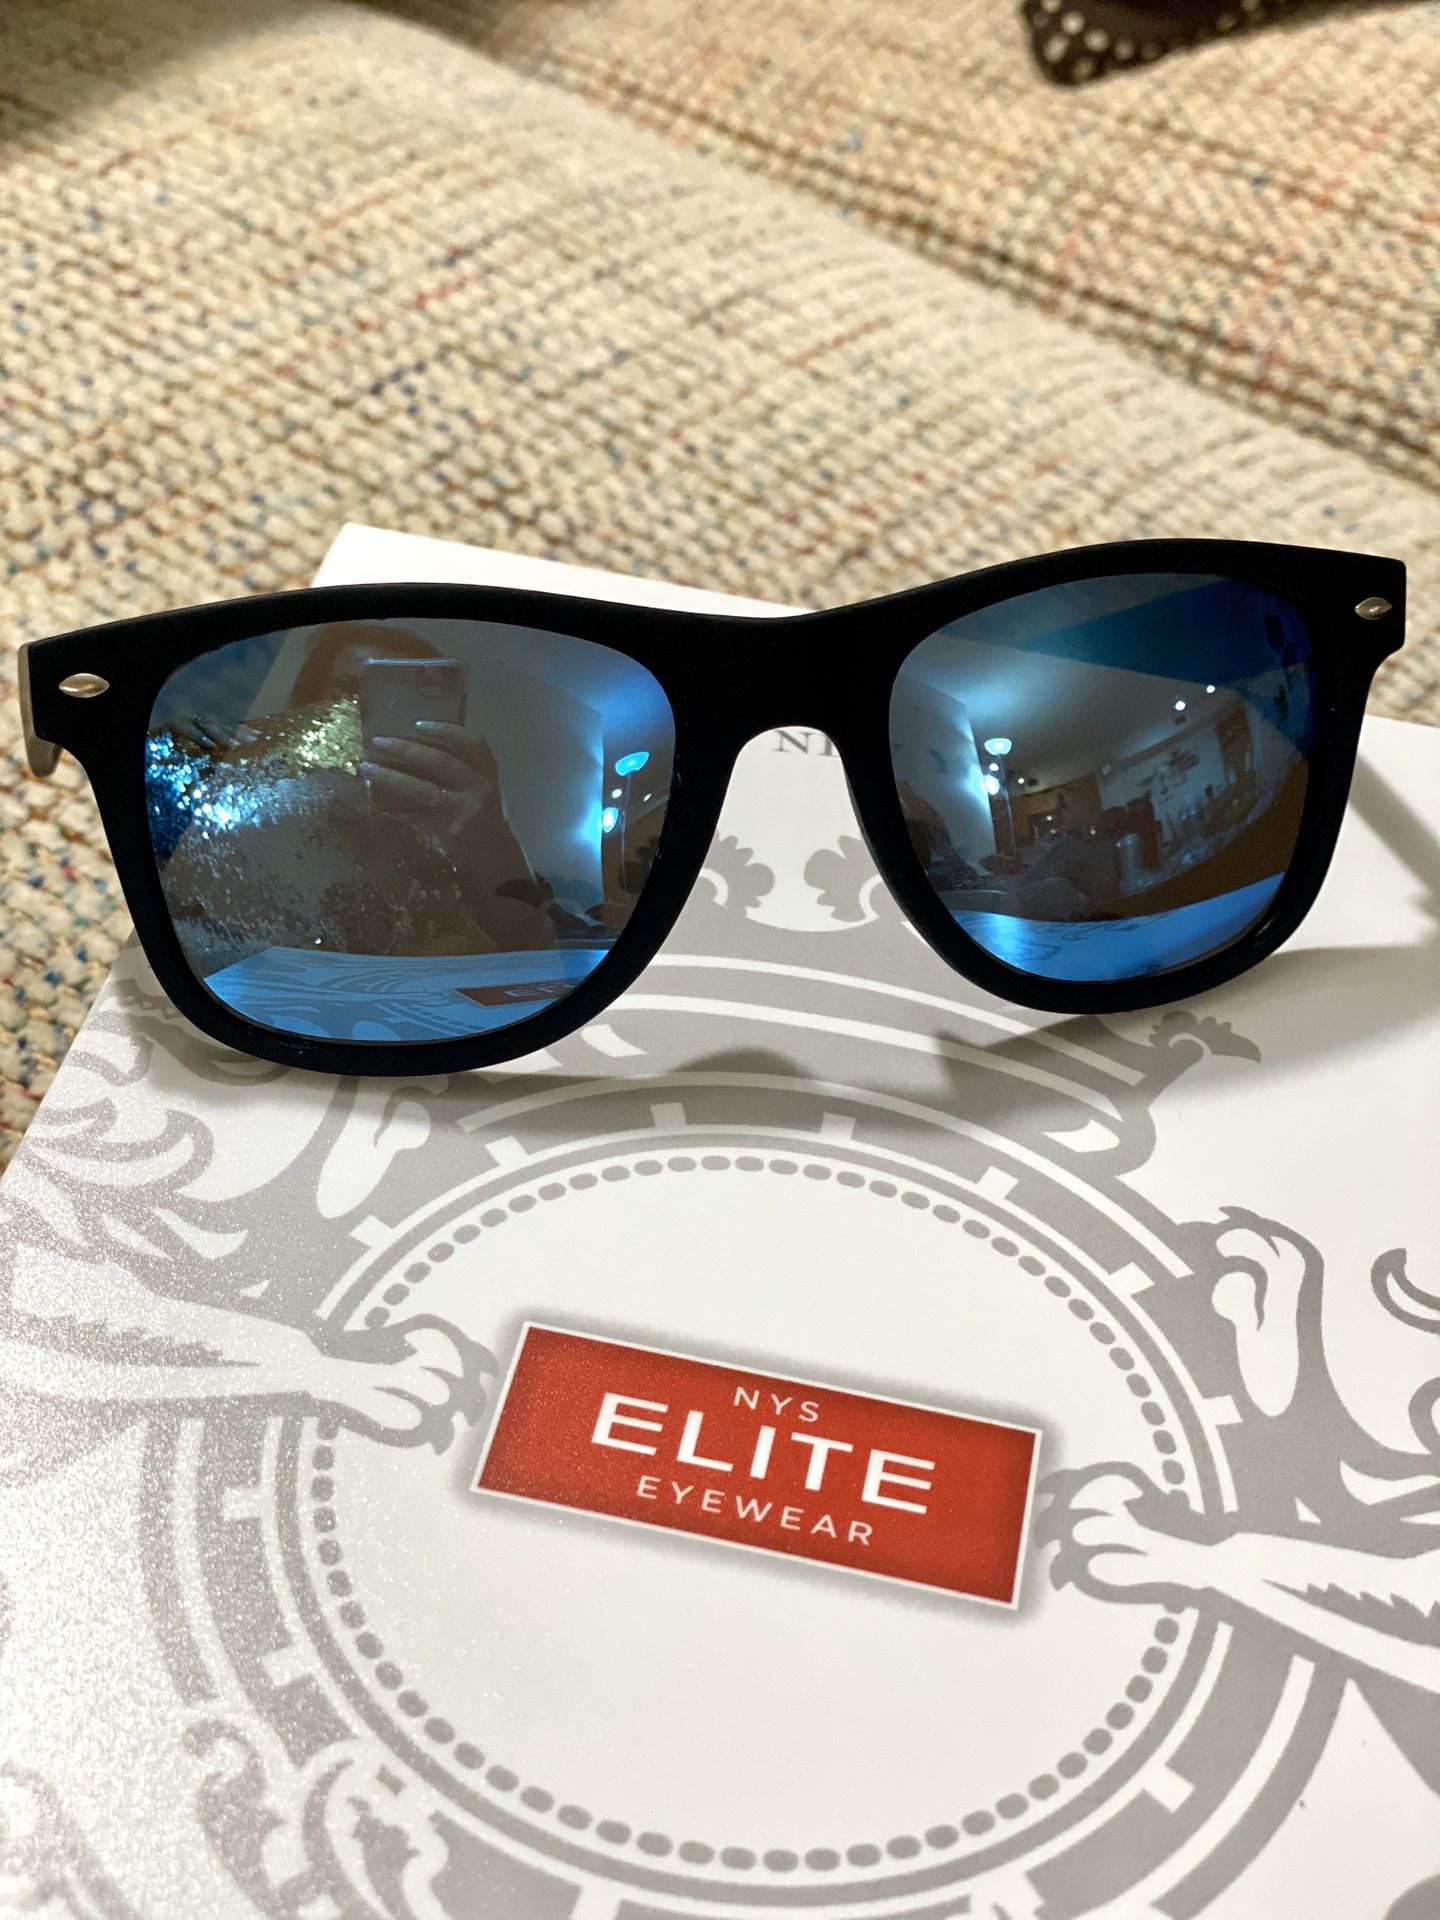 GET 1 - $35 or Get 2 - $55 NYS Elite Eyewear - Polarized Sunglasses- Brand new Polarized